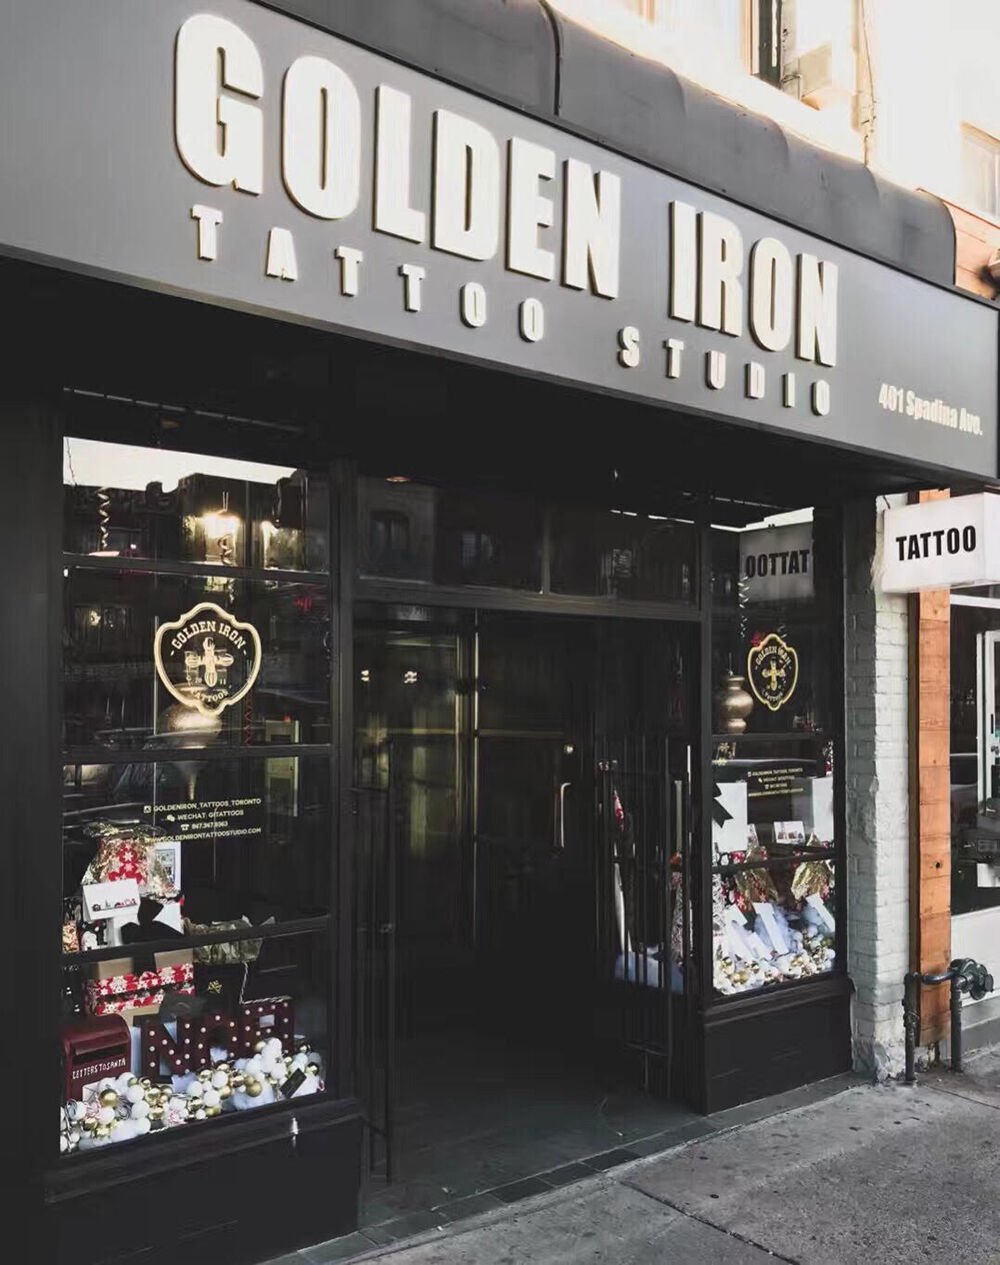 Golden Iron Tattoo Studio  Tattoo Work Shop  Golden Iron Tattoo Studio   LinkedIn